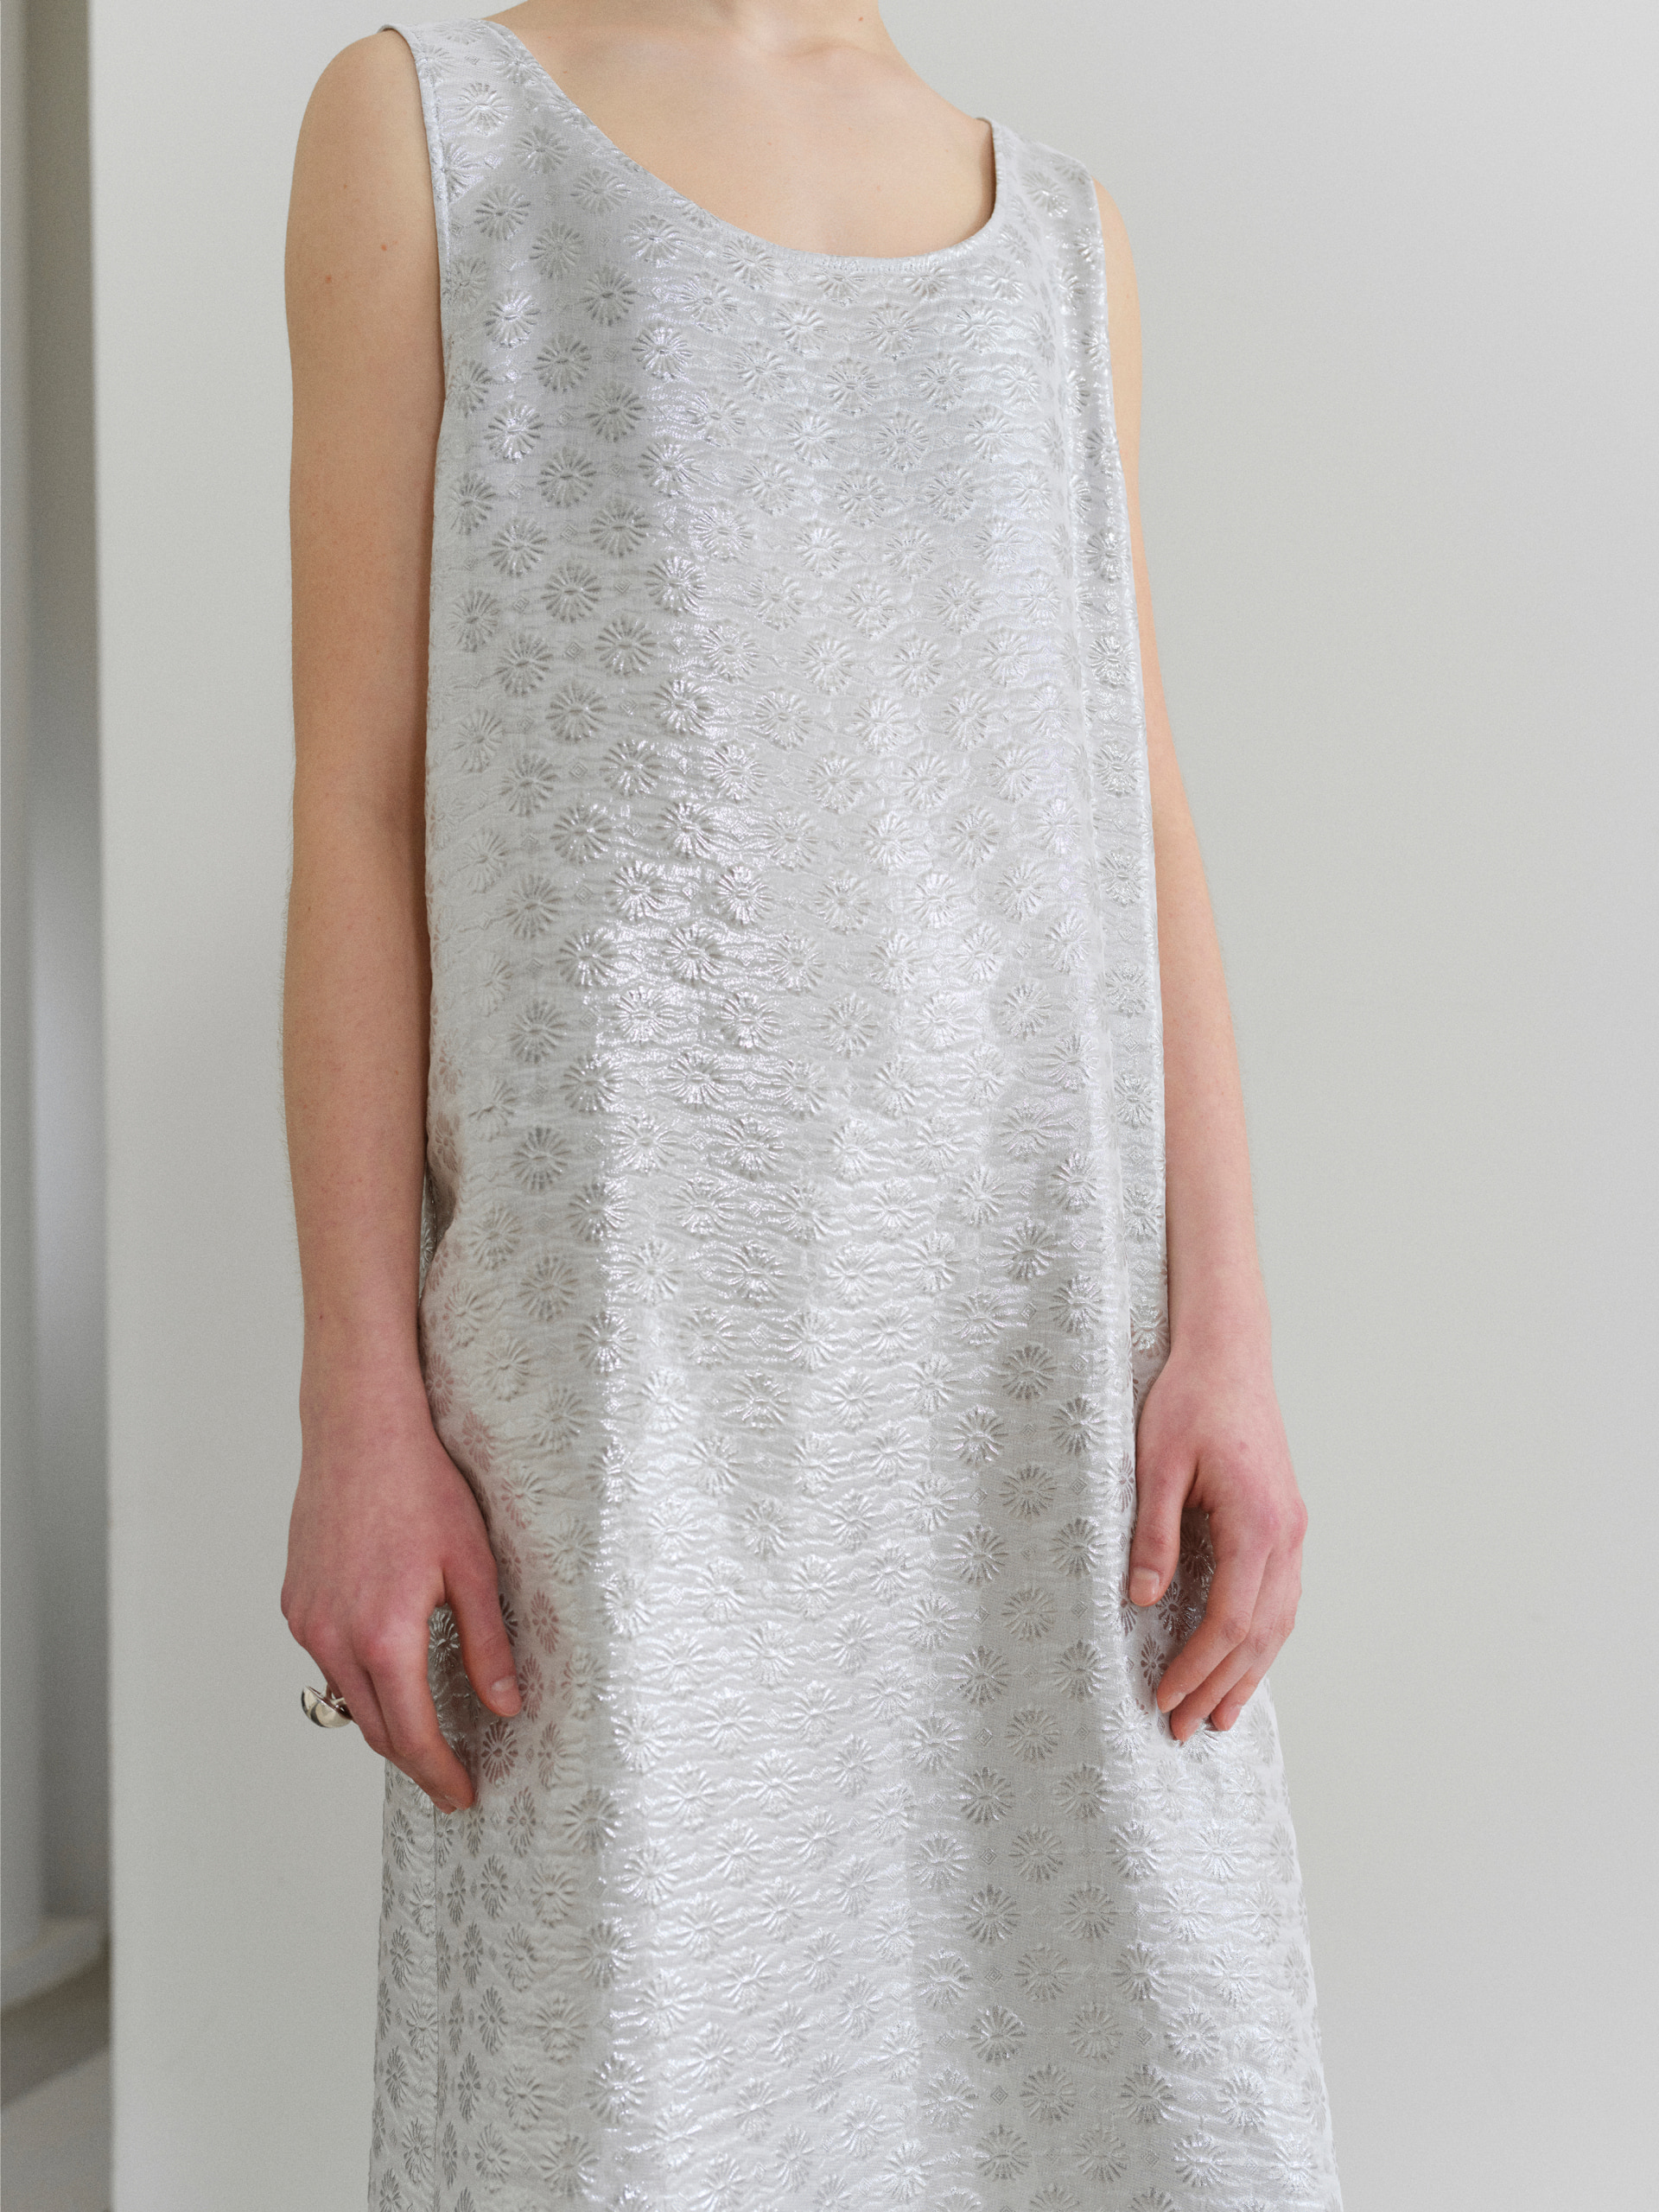 Silky Sleeveless Dress (Silver Flower)** Limited Item